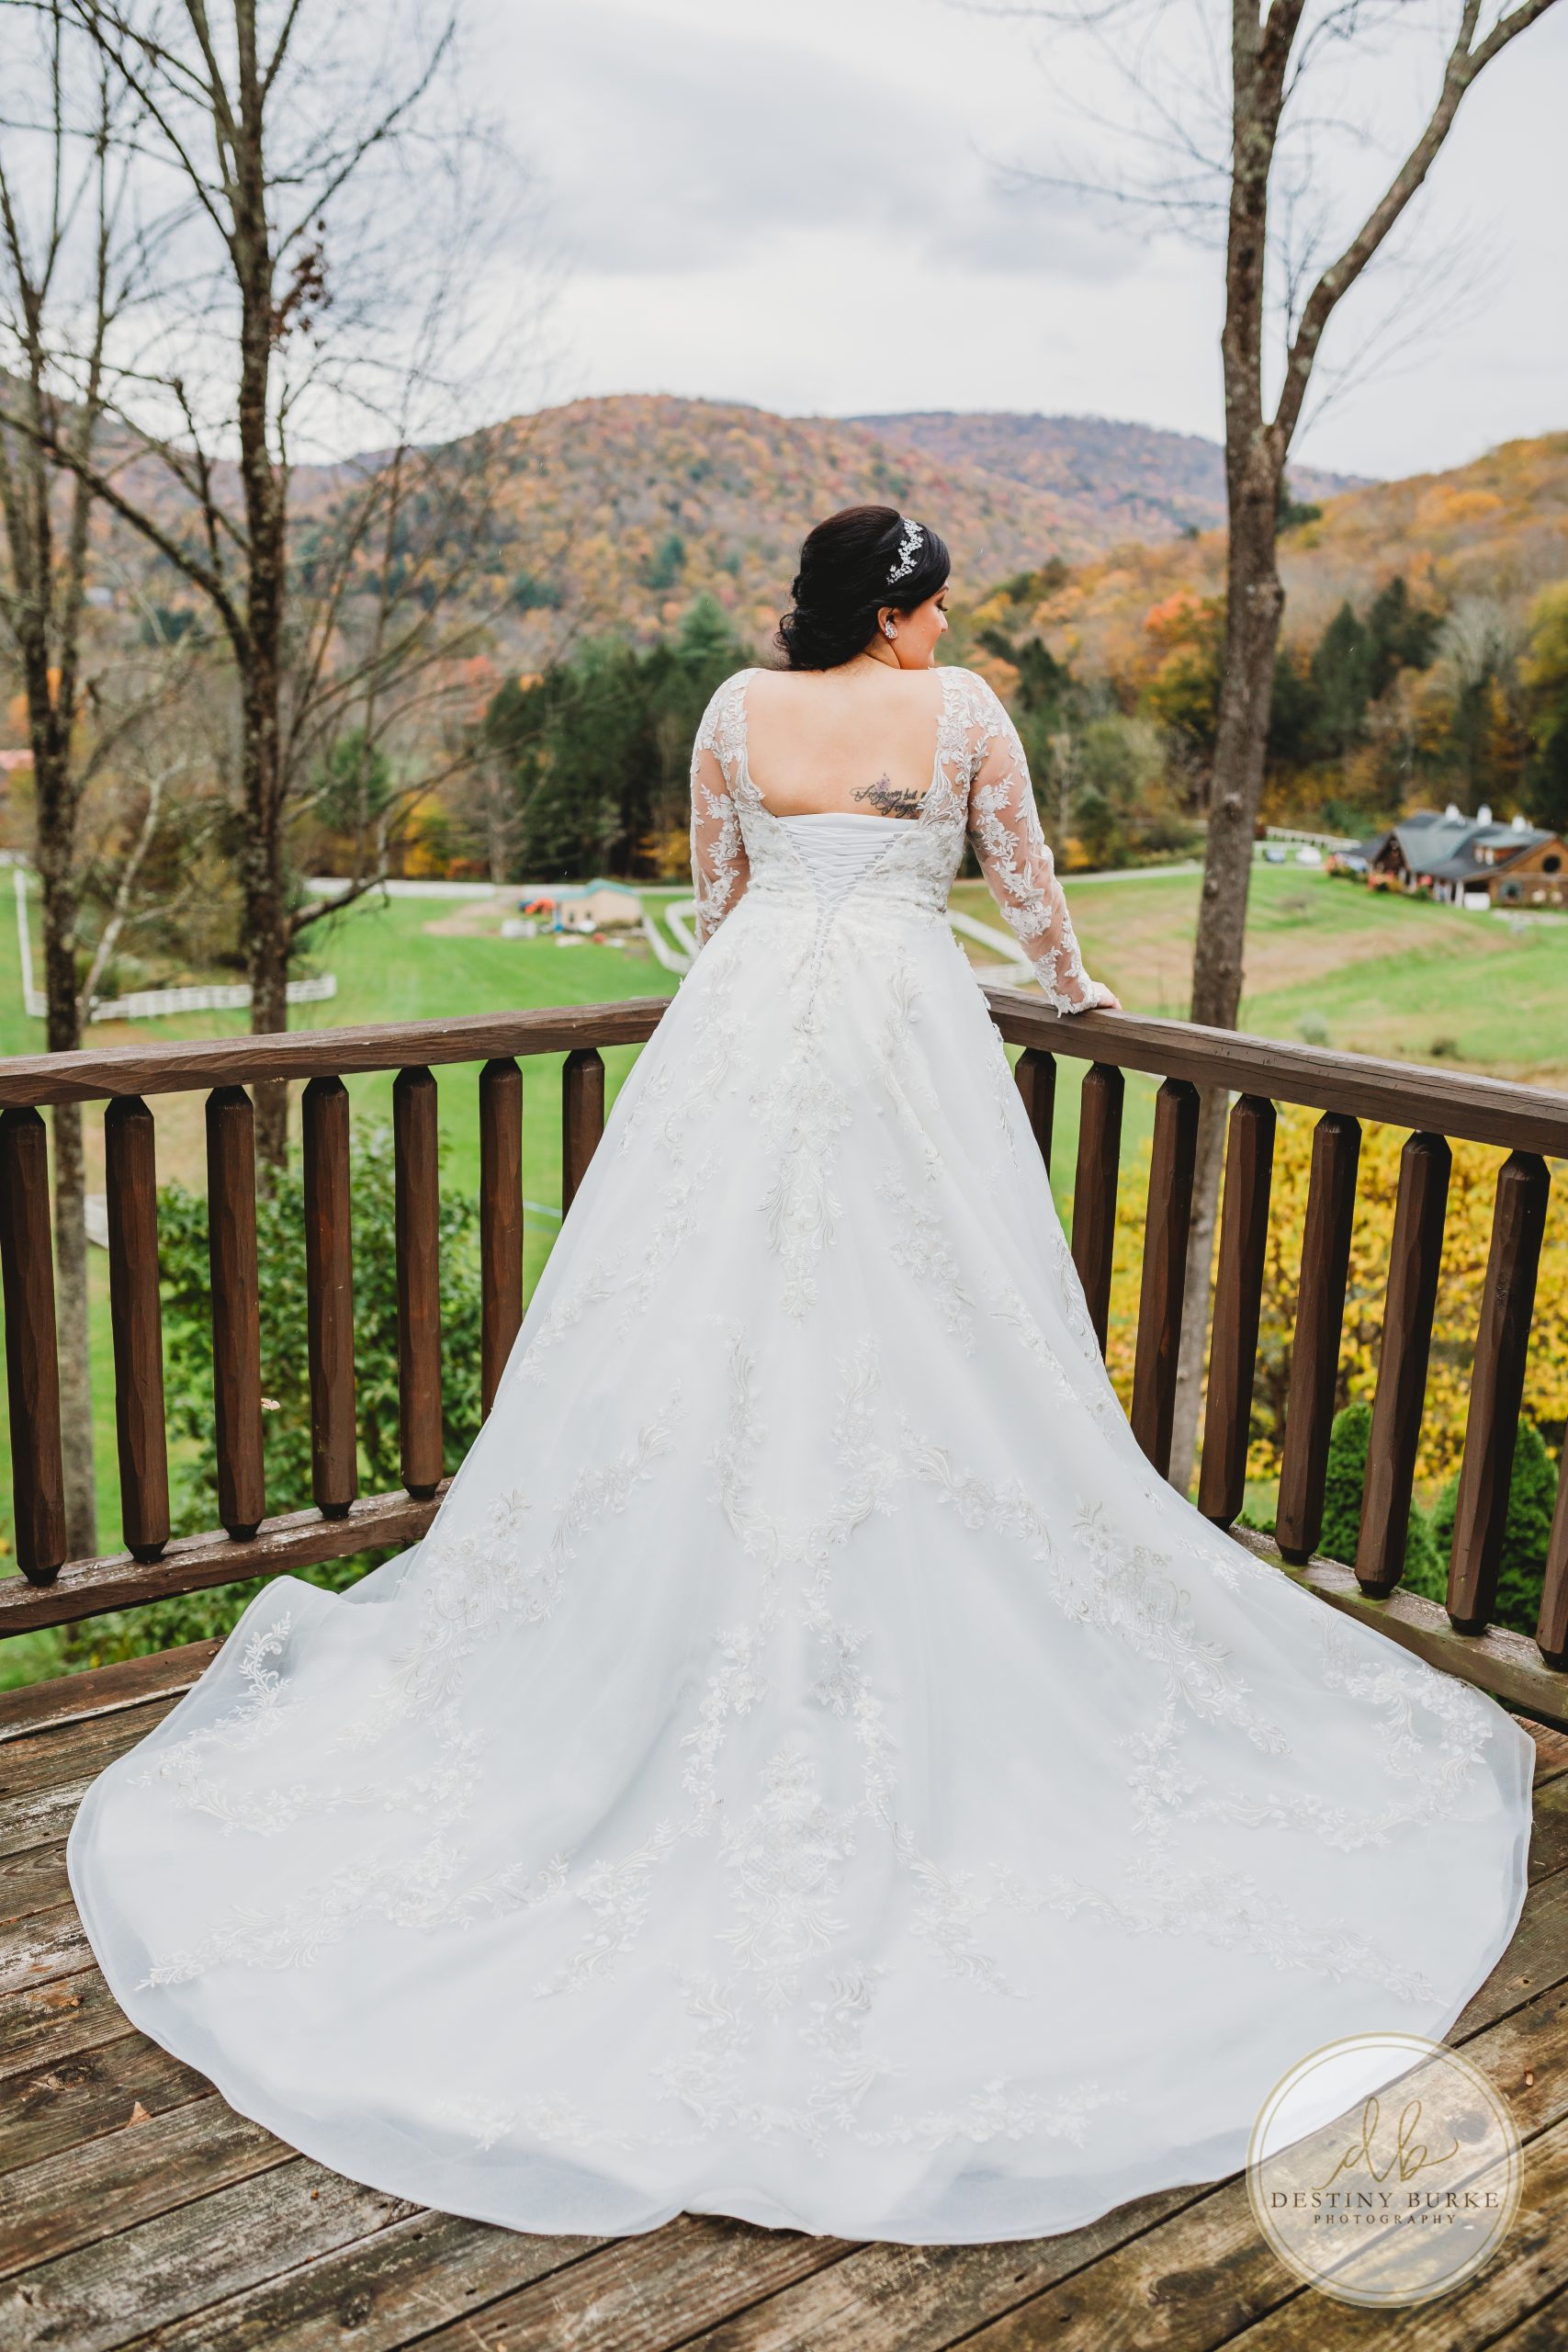 Estates by Brophy, DeerRidge, Catskills, Mountains, fall, autumn, wedding, bride, groom